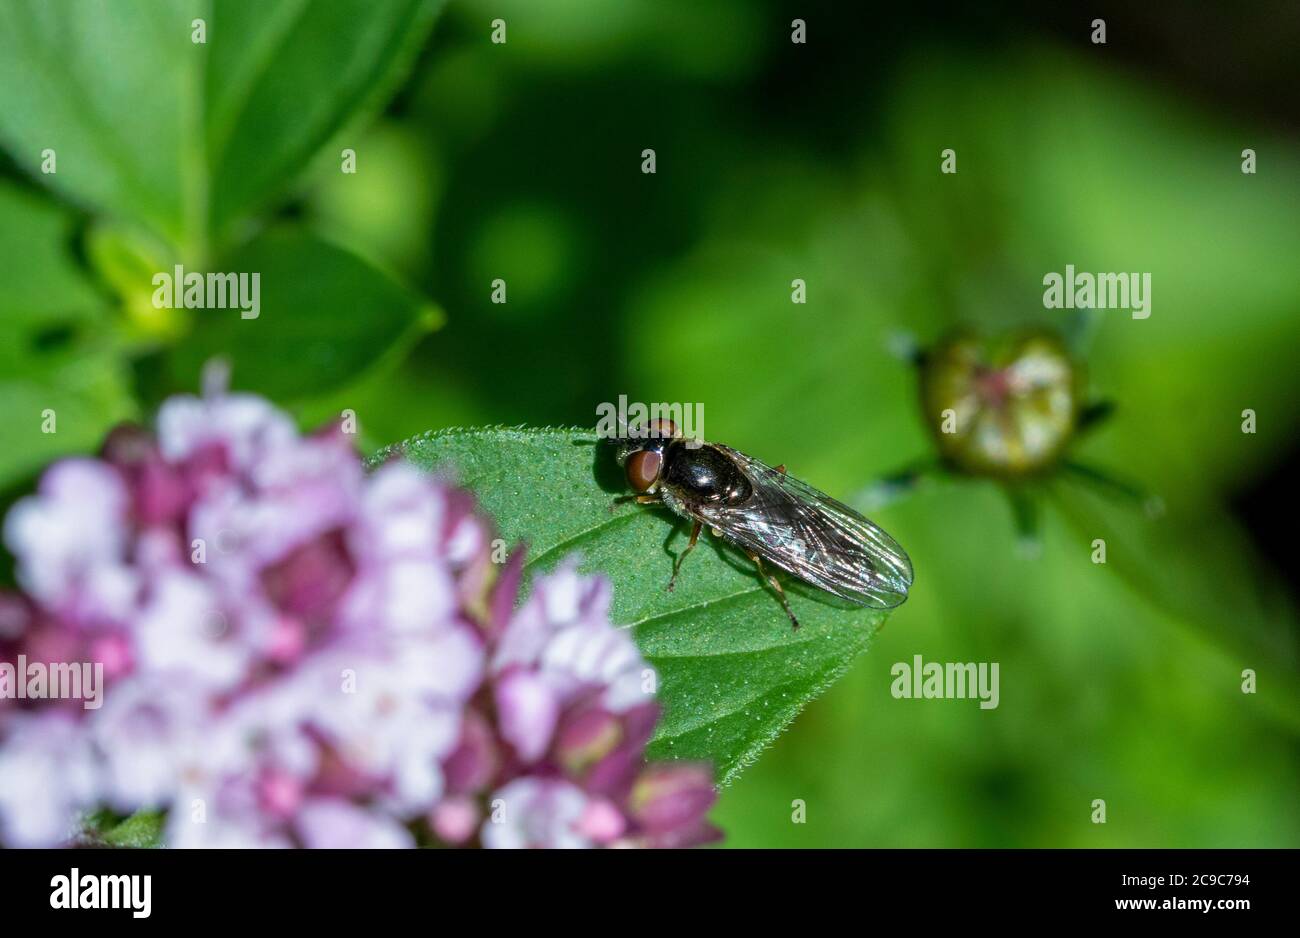 Platycheirus albimanus hoverfly on leaf Stock Photo